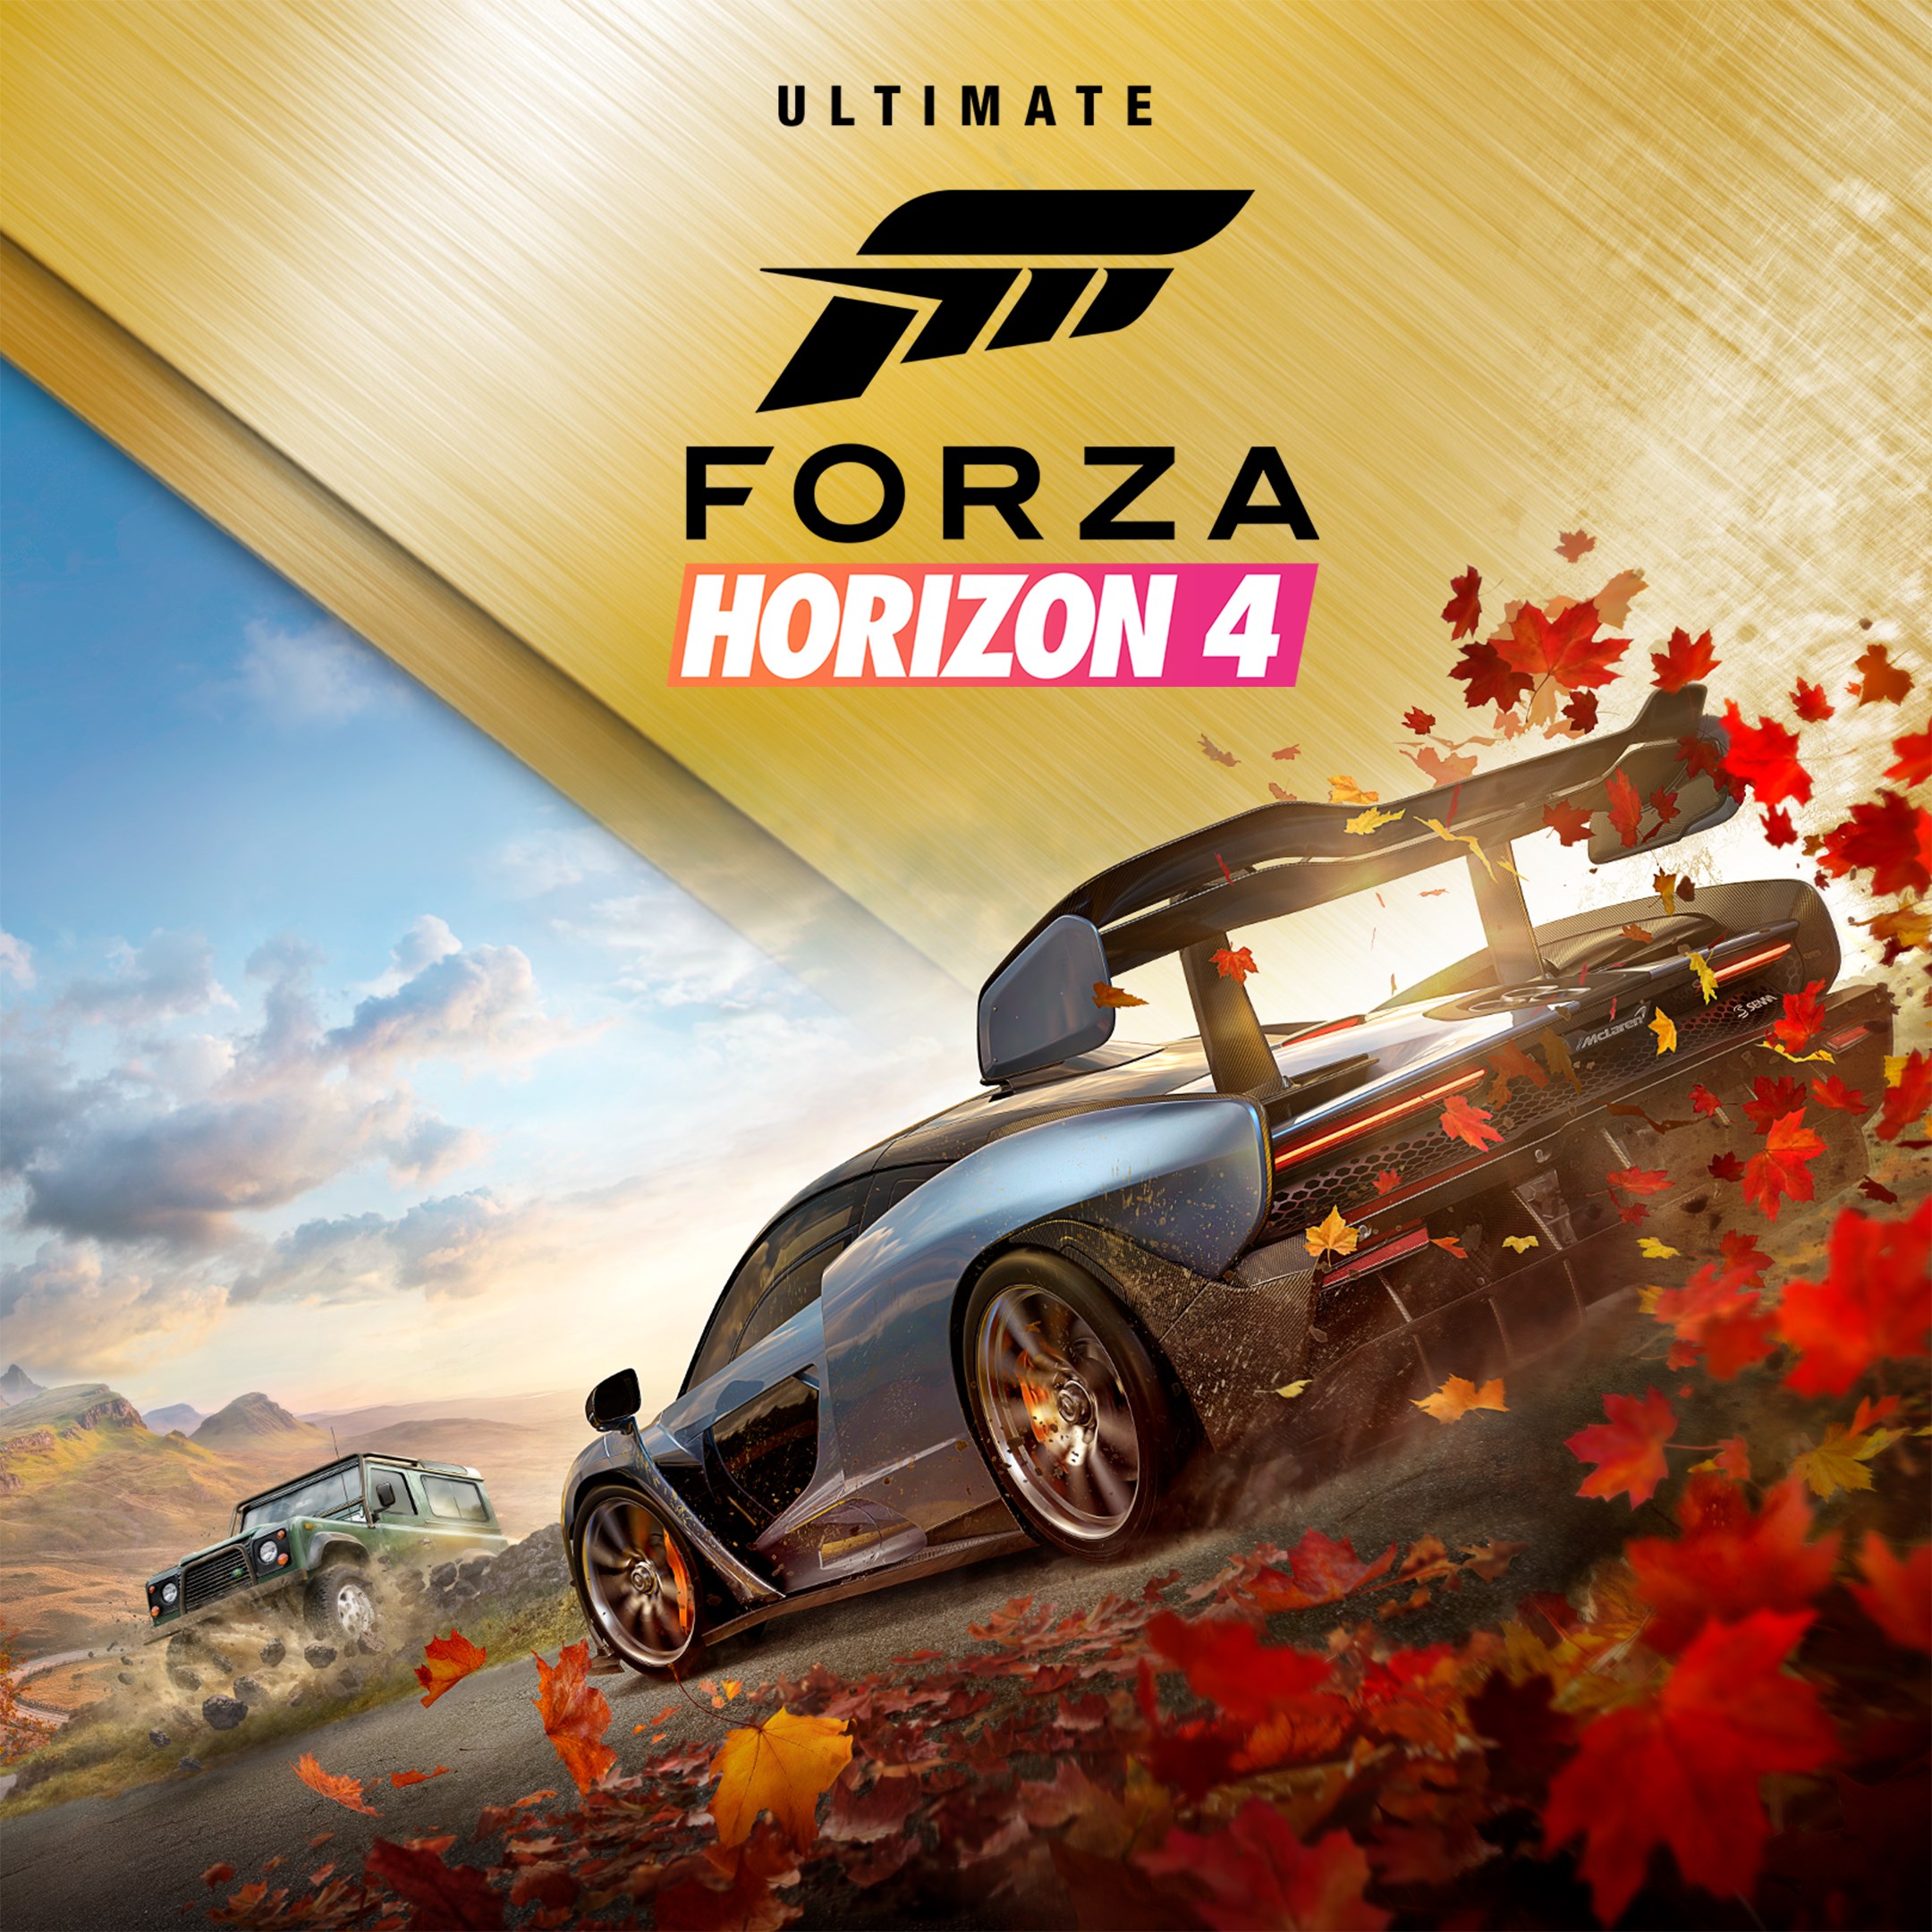 Forza Horizon 4 アルティメット版